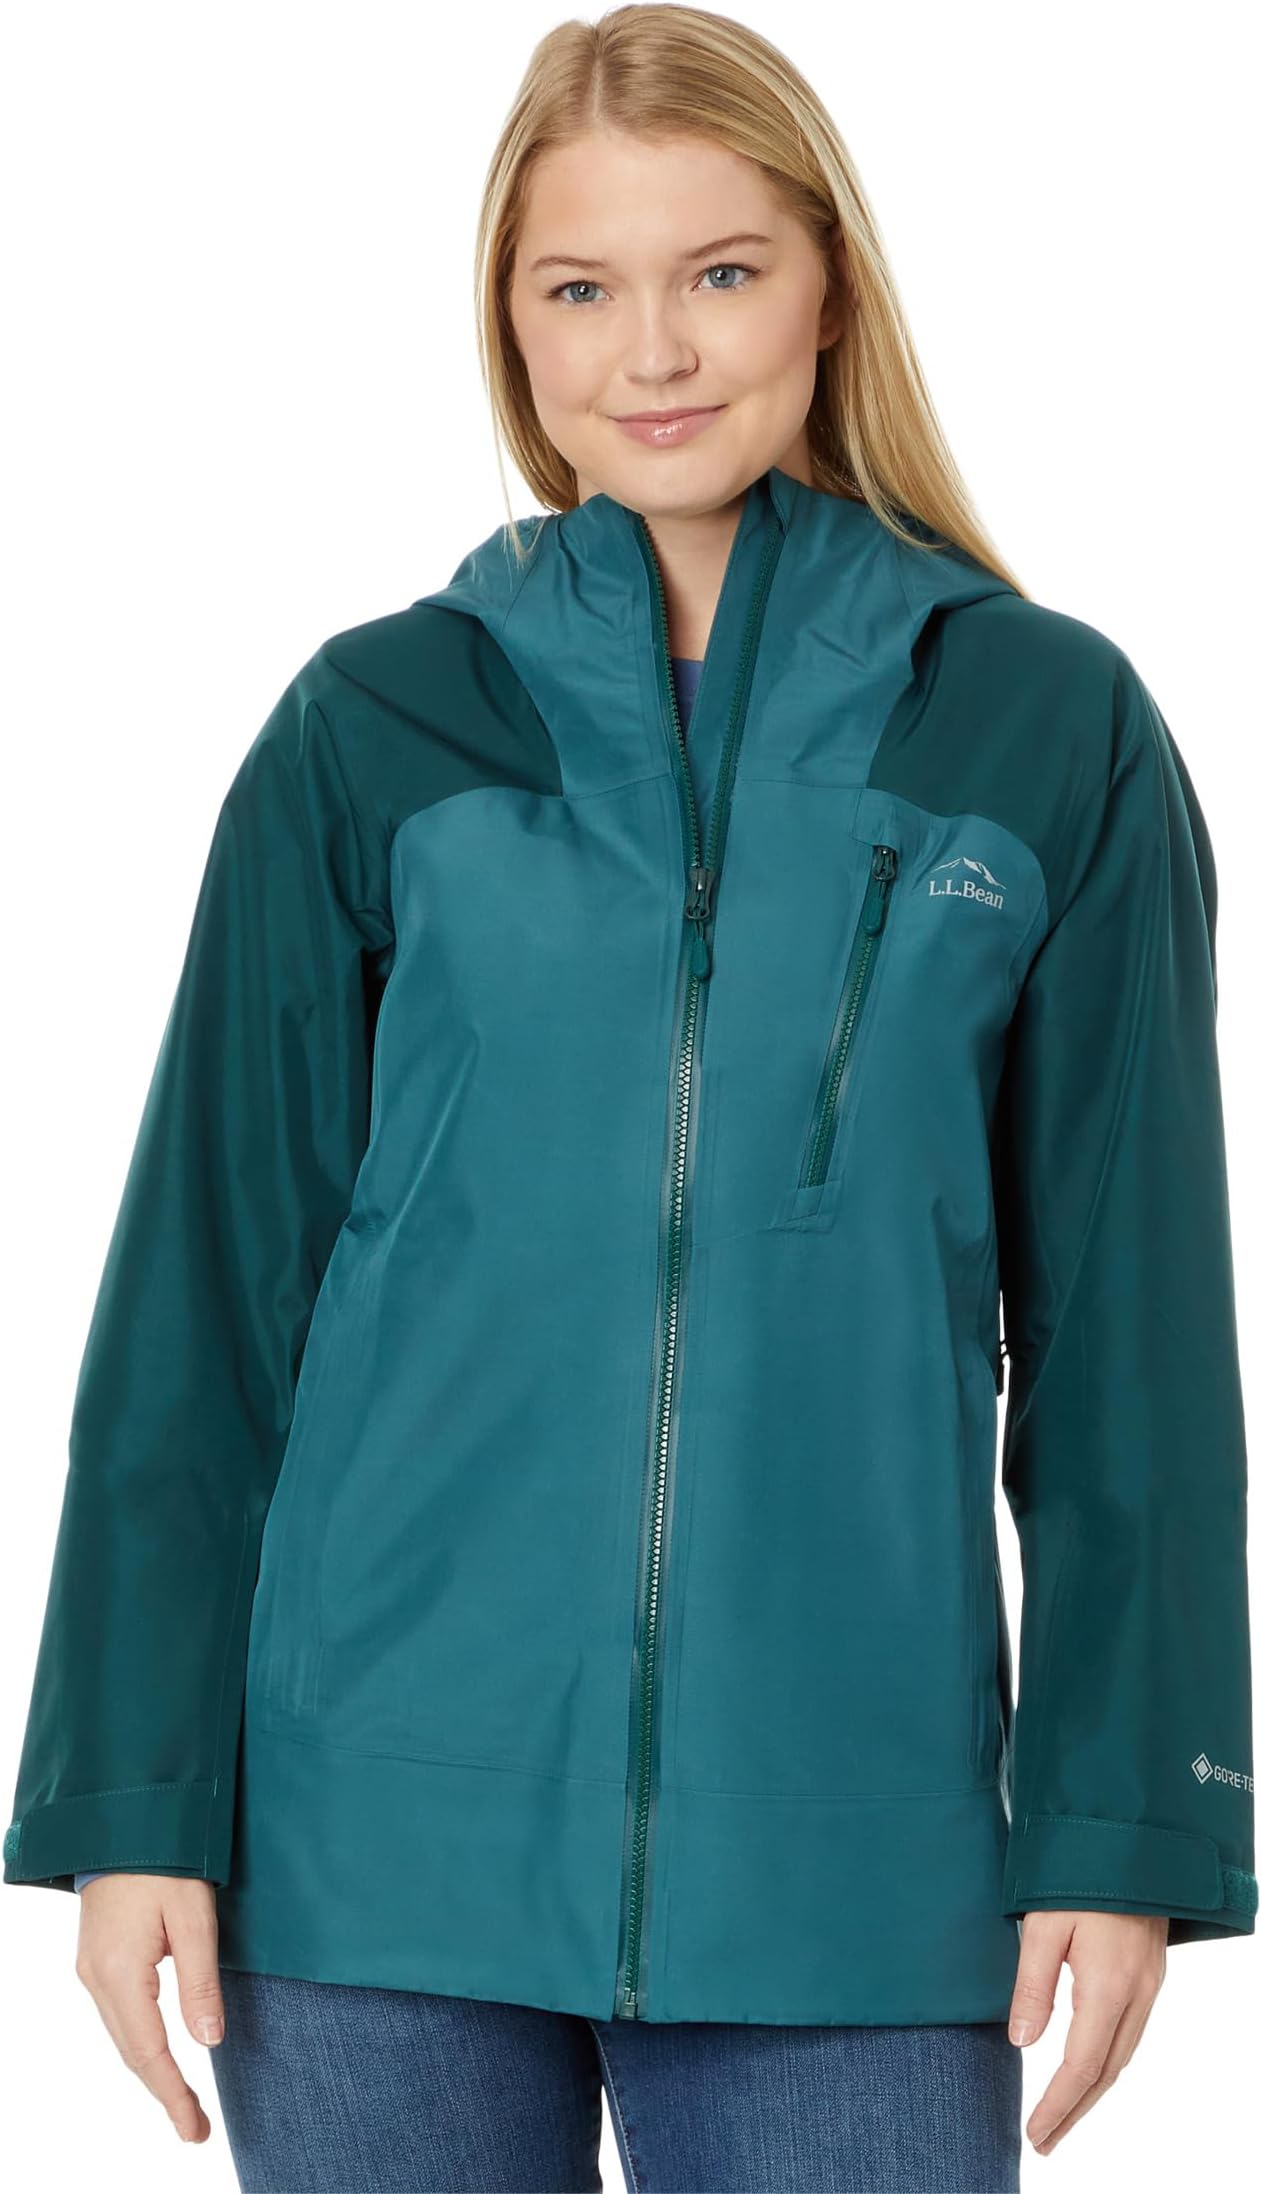 Куртка Pathfinder GORE-TEX Jacket L.L.Bean, цвет Spruce Pine/Dark Pine pine